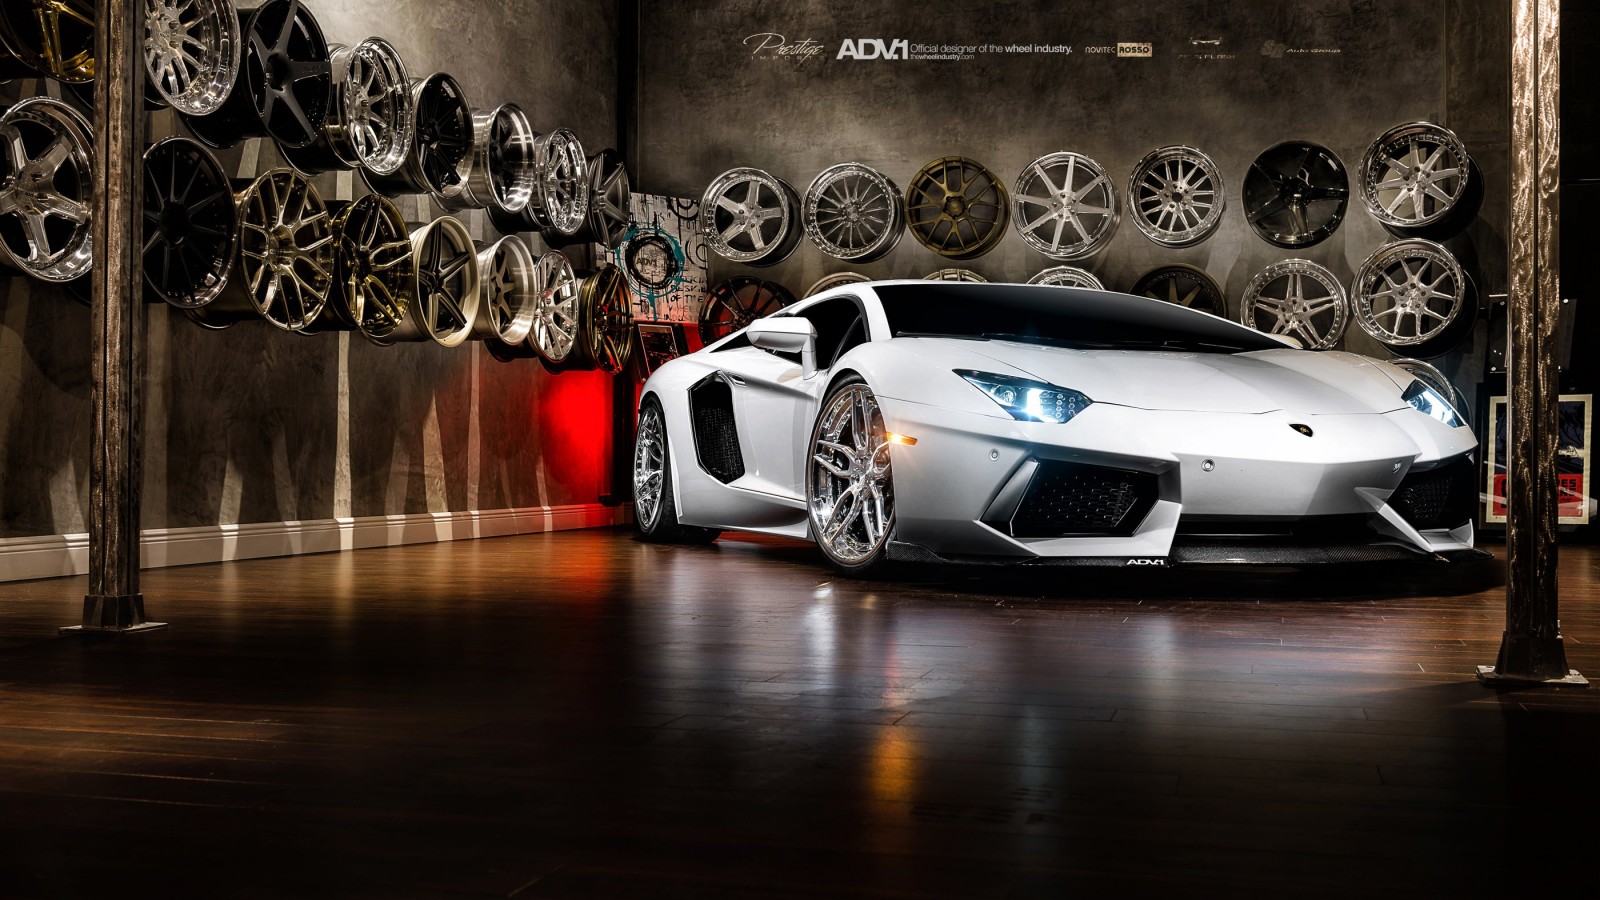 Lamborghini Aventador On ADV.1 Wheels Wallpaper for Desktop 1600x900